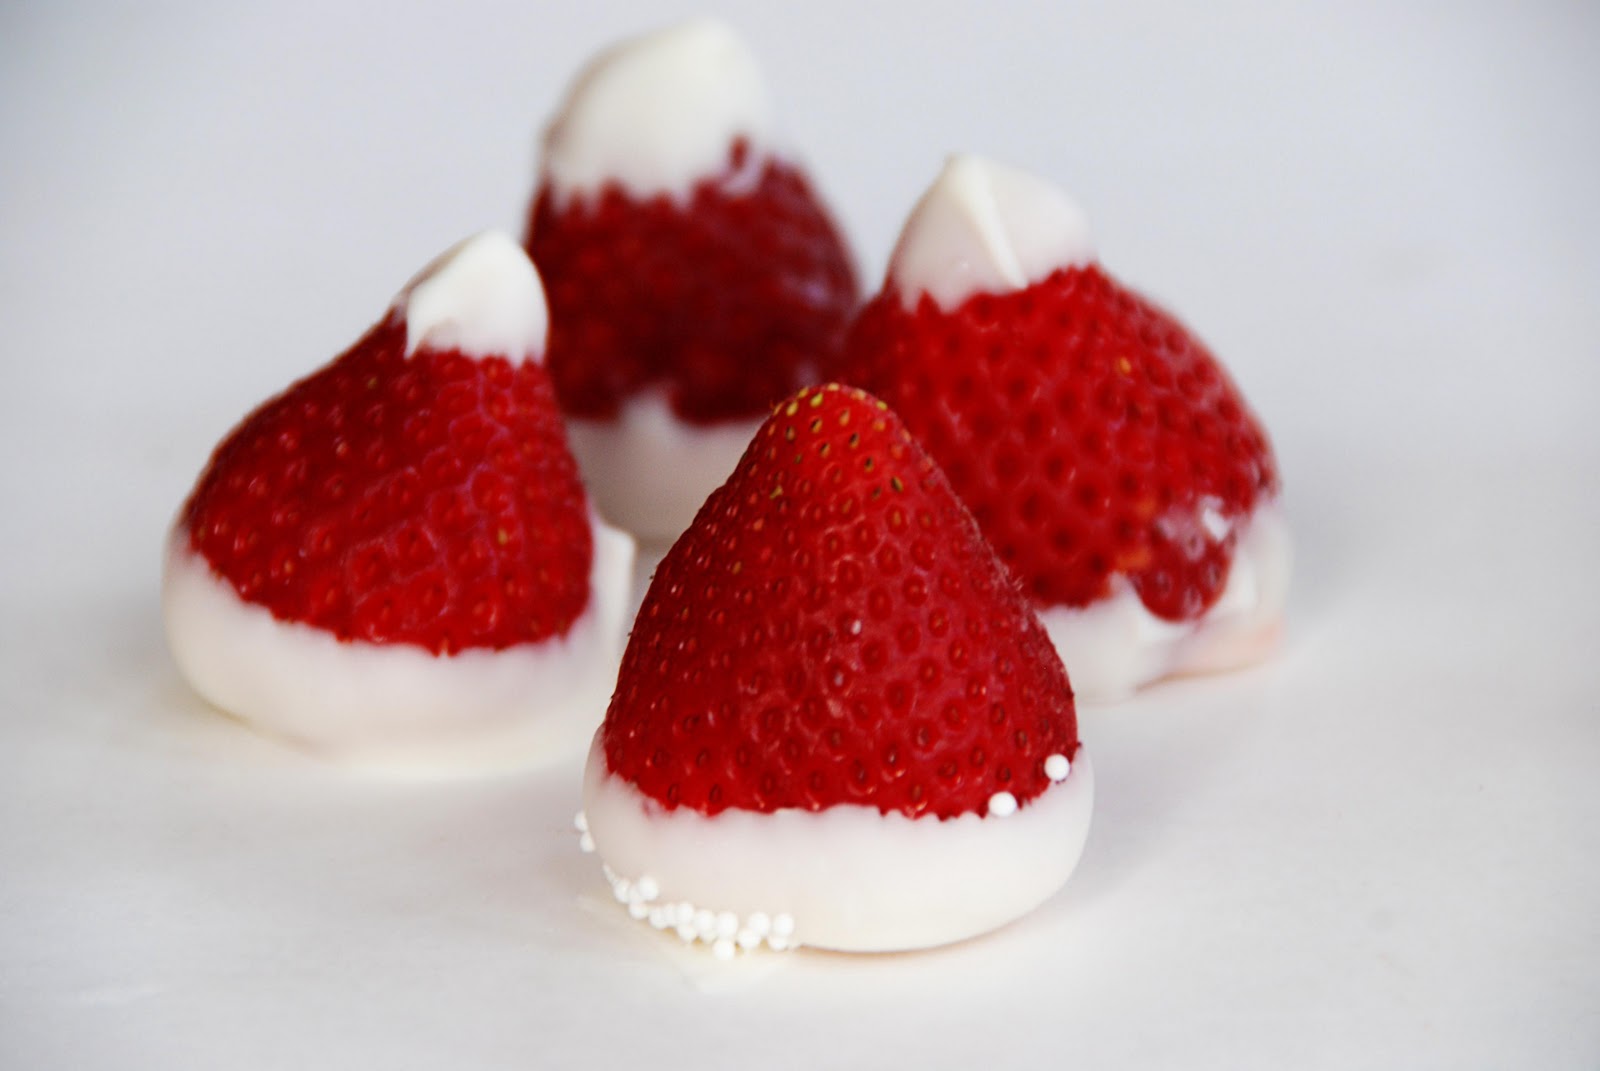 How To Make Strawberry Santa Hat Cupcakes